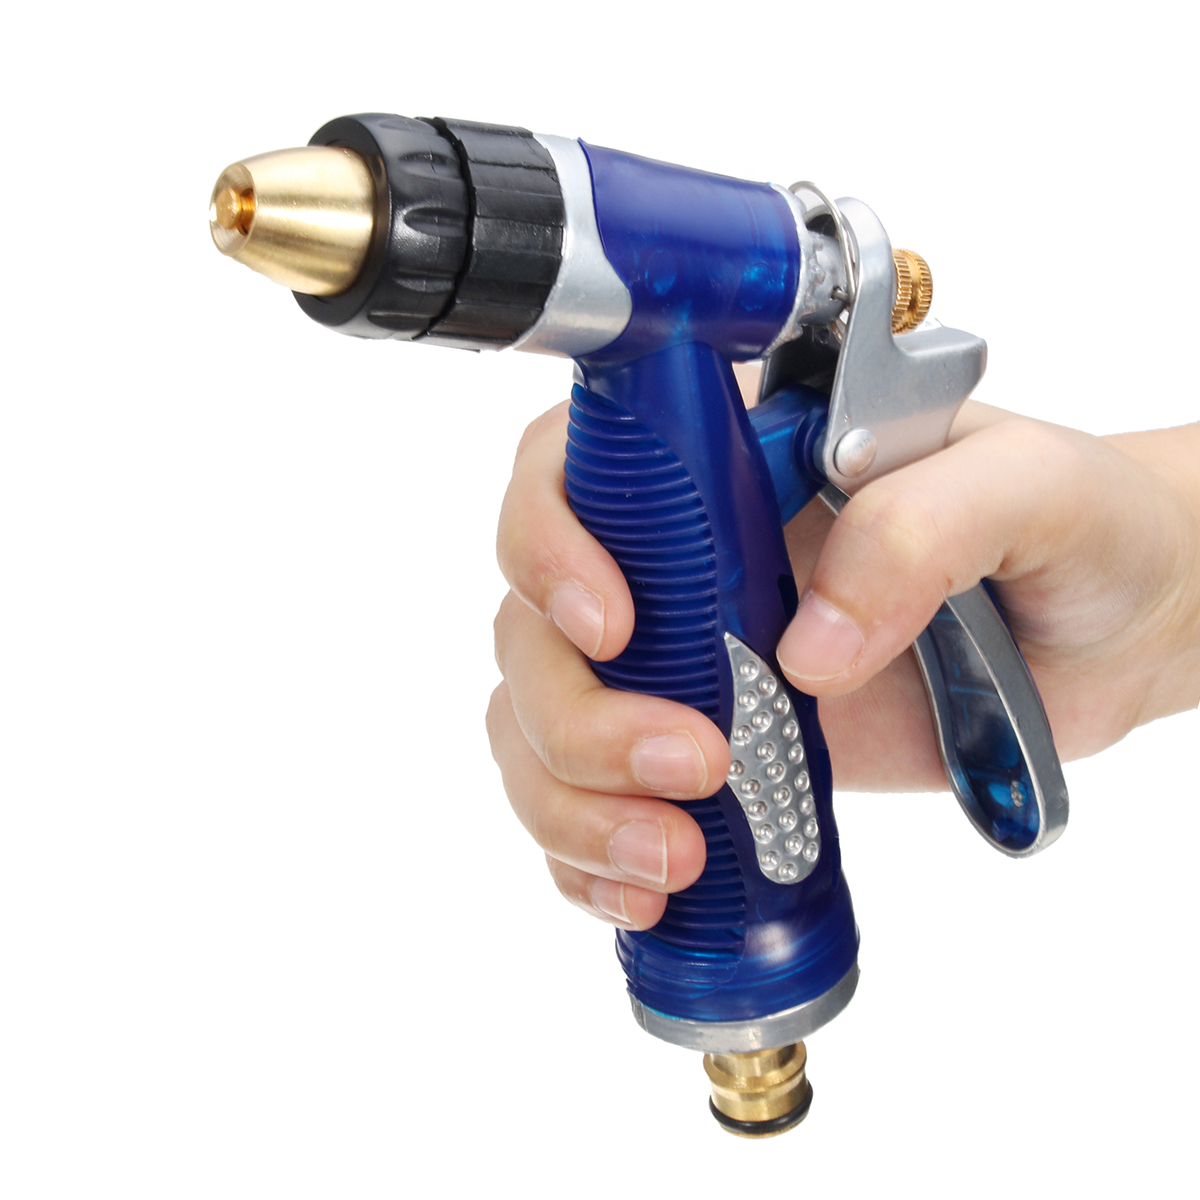 Garden-Water-Hose-Nozzle-Jet-Spray-Gun-High-Pressure-Adjustable-Watering-1320583